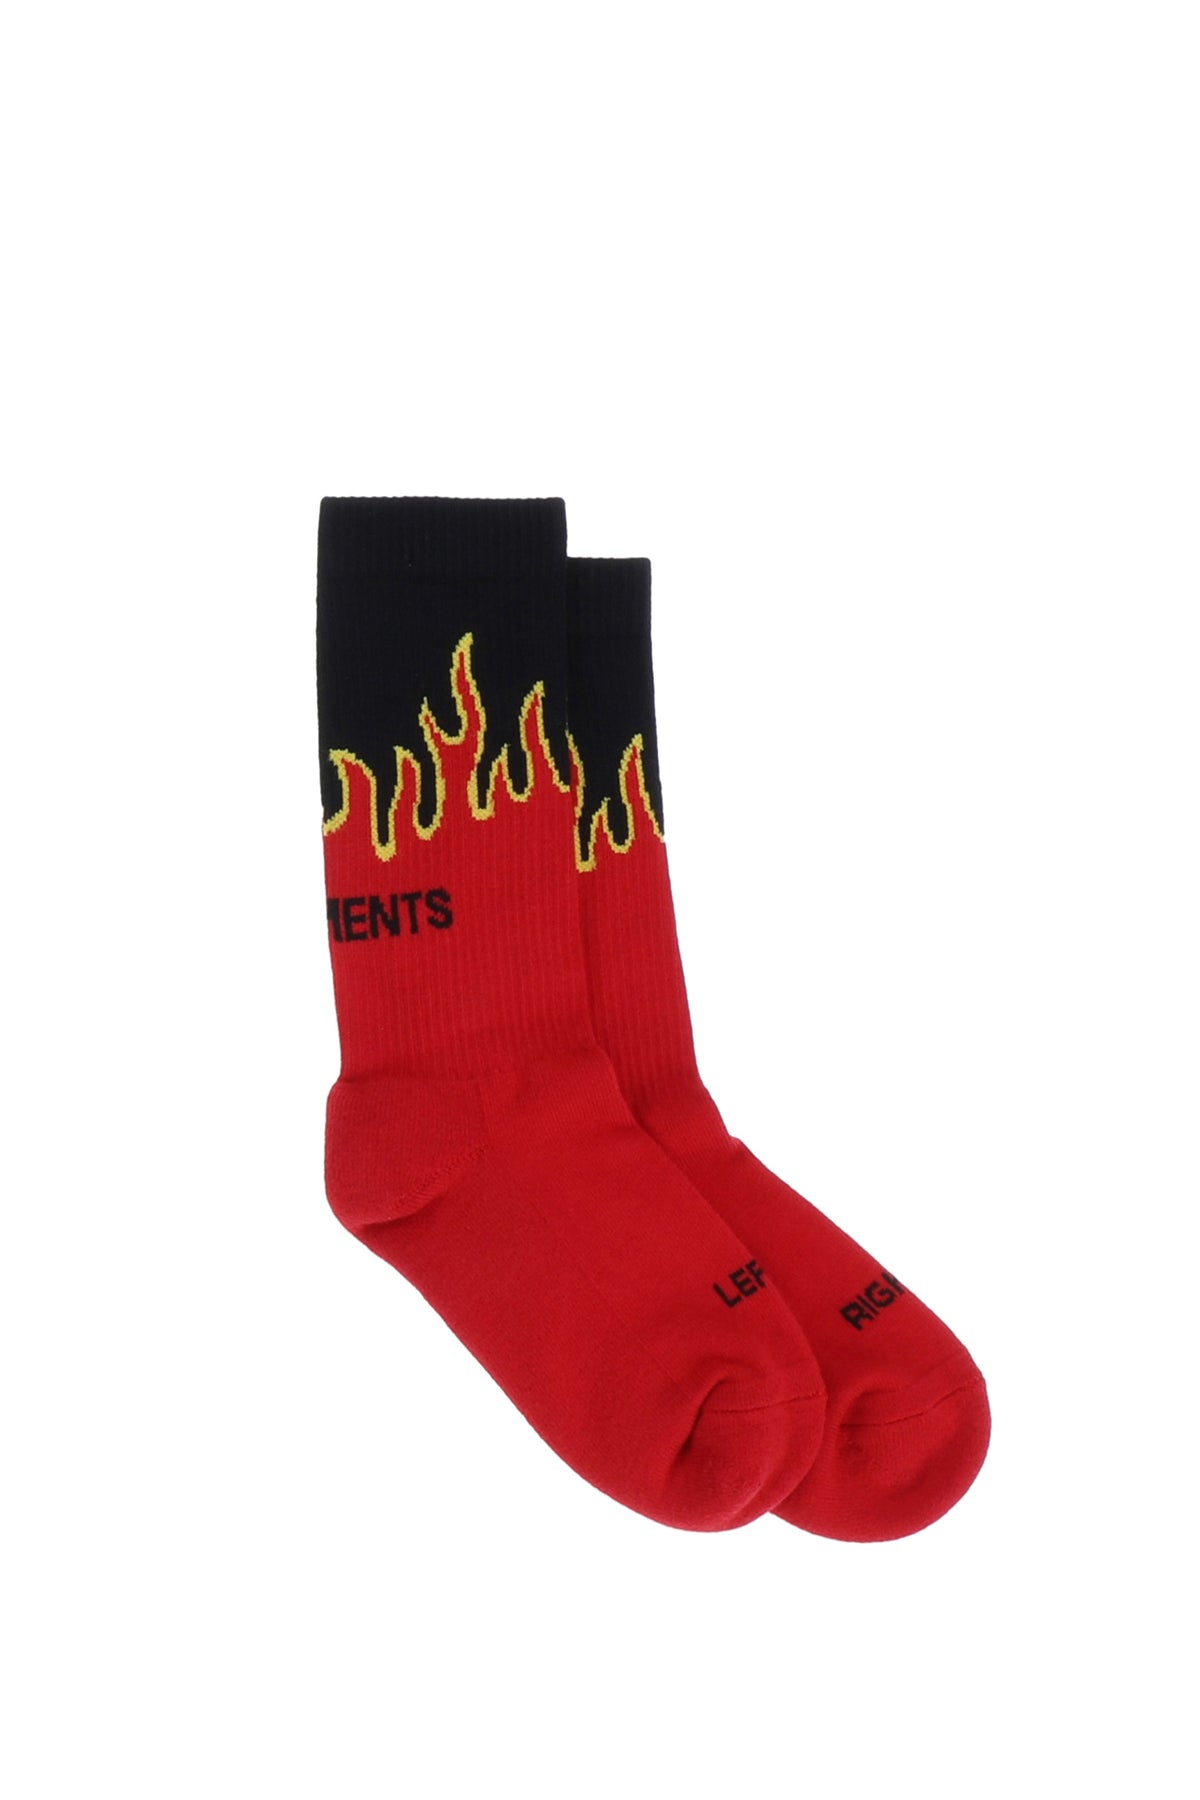 FIRE SOCKS / RED